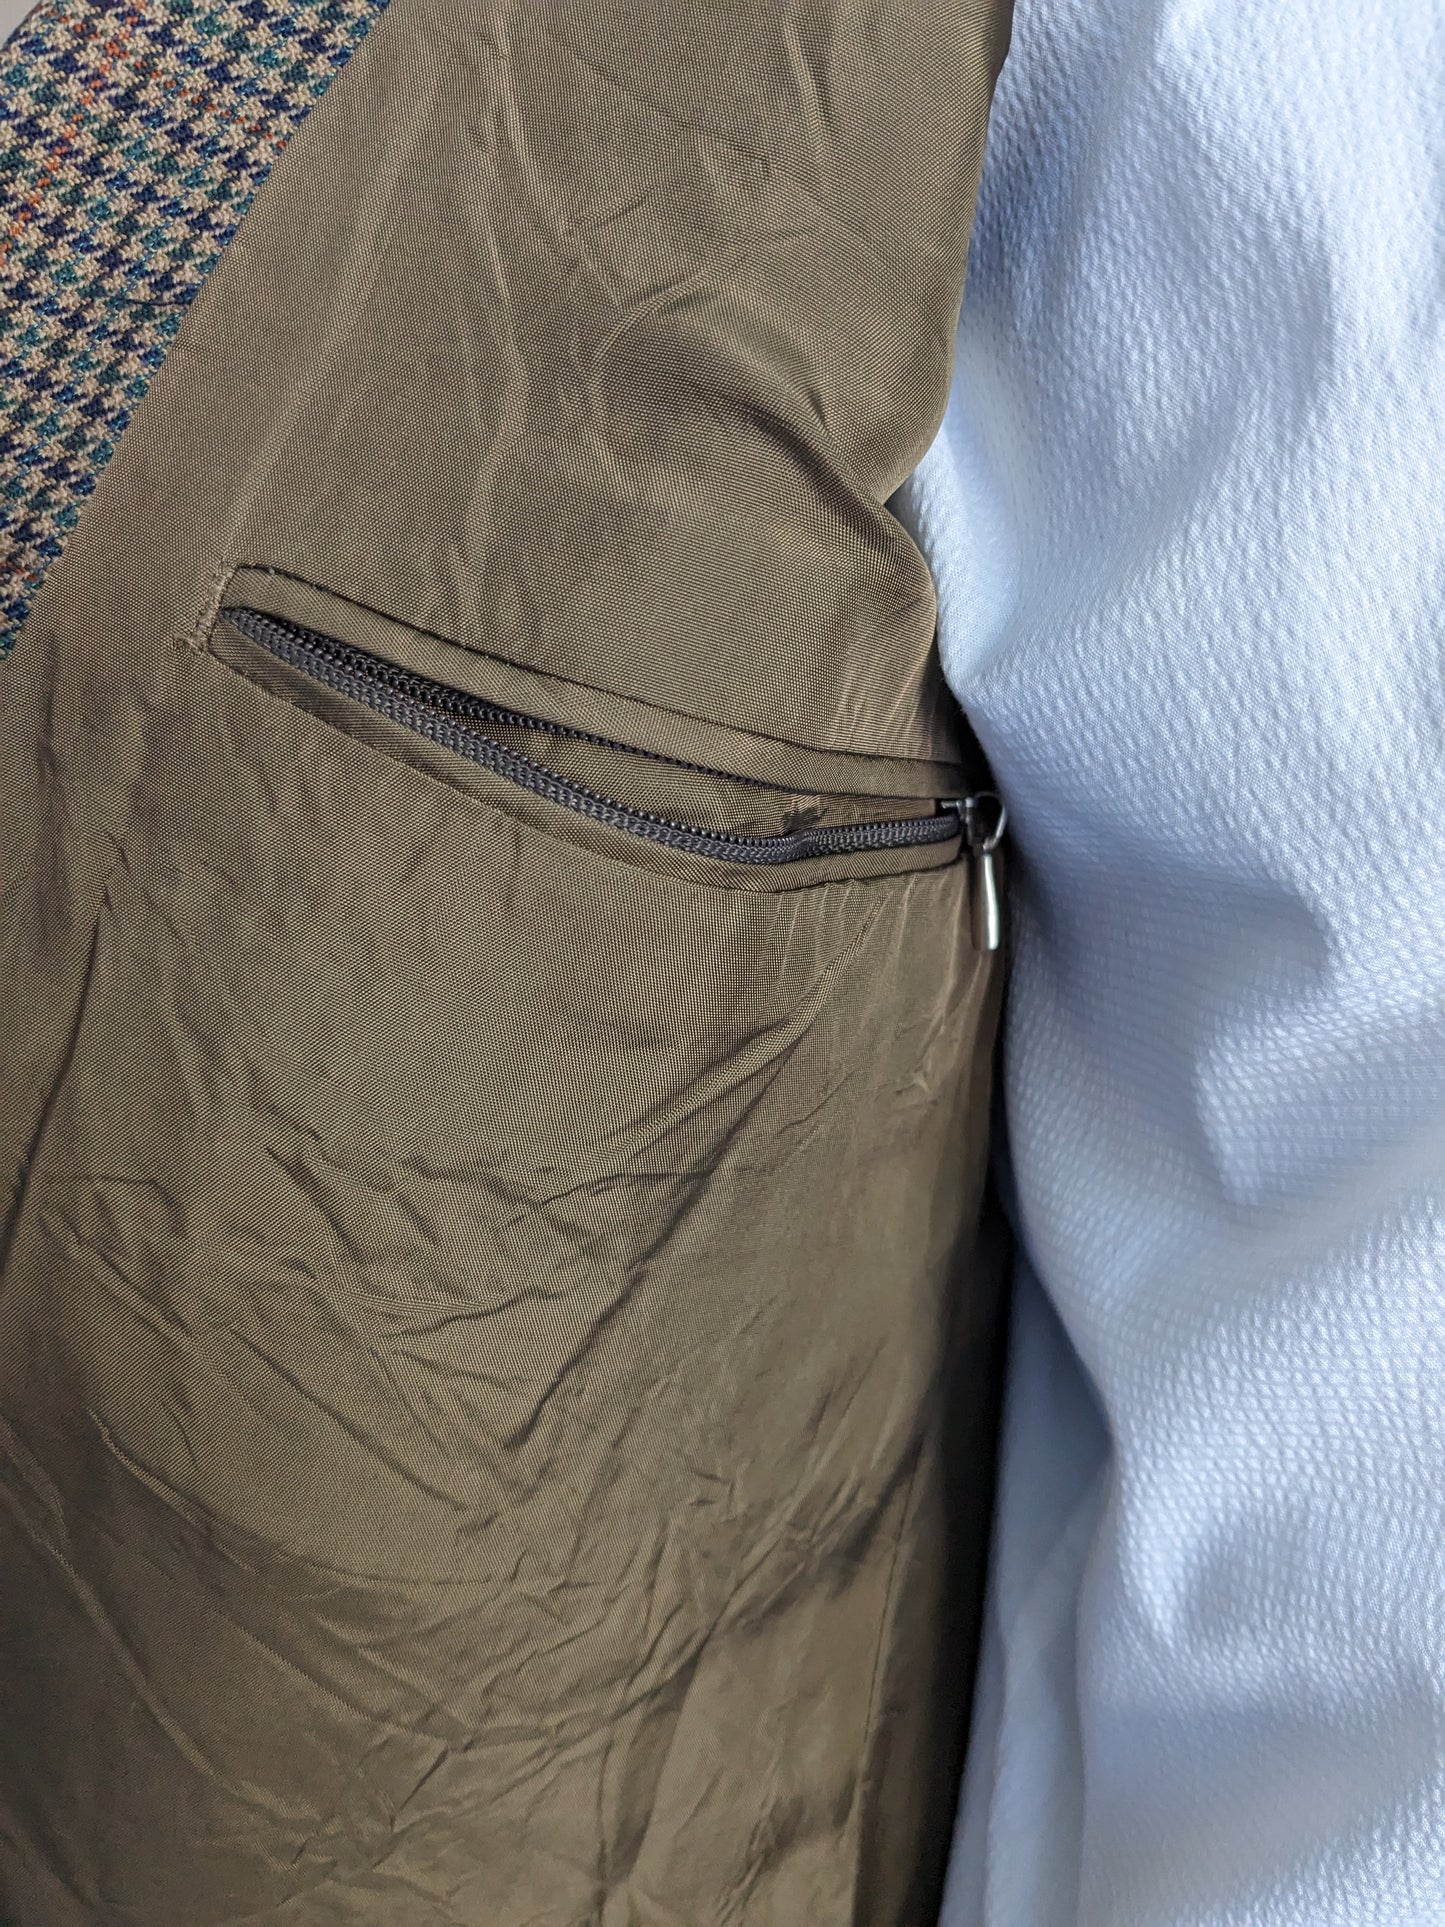 Veste en laine John G Hardy. Motif brun avec bande orange vert bleu. Taille 52 / L.